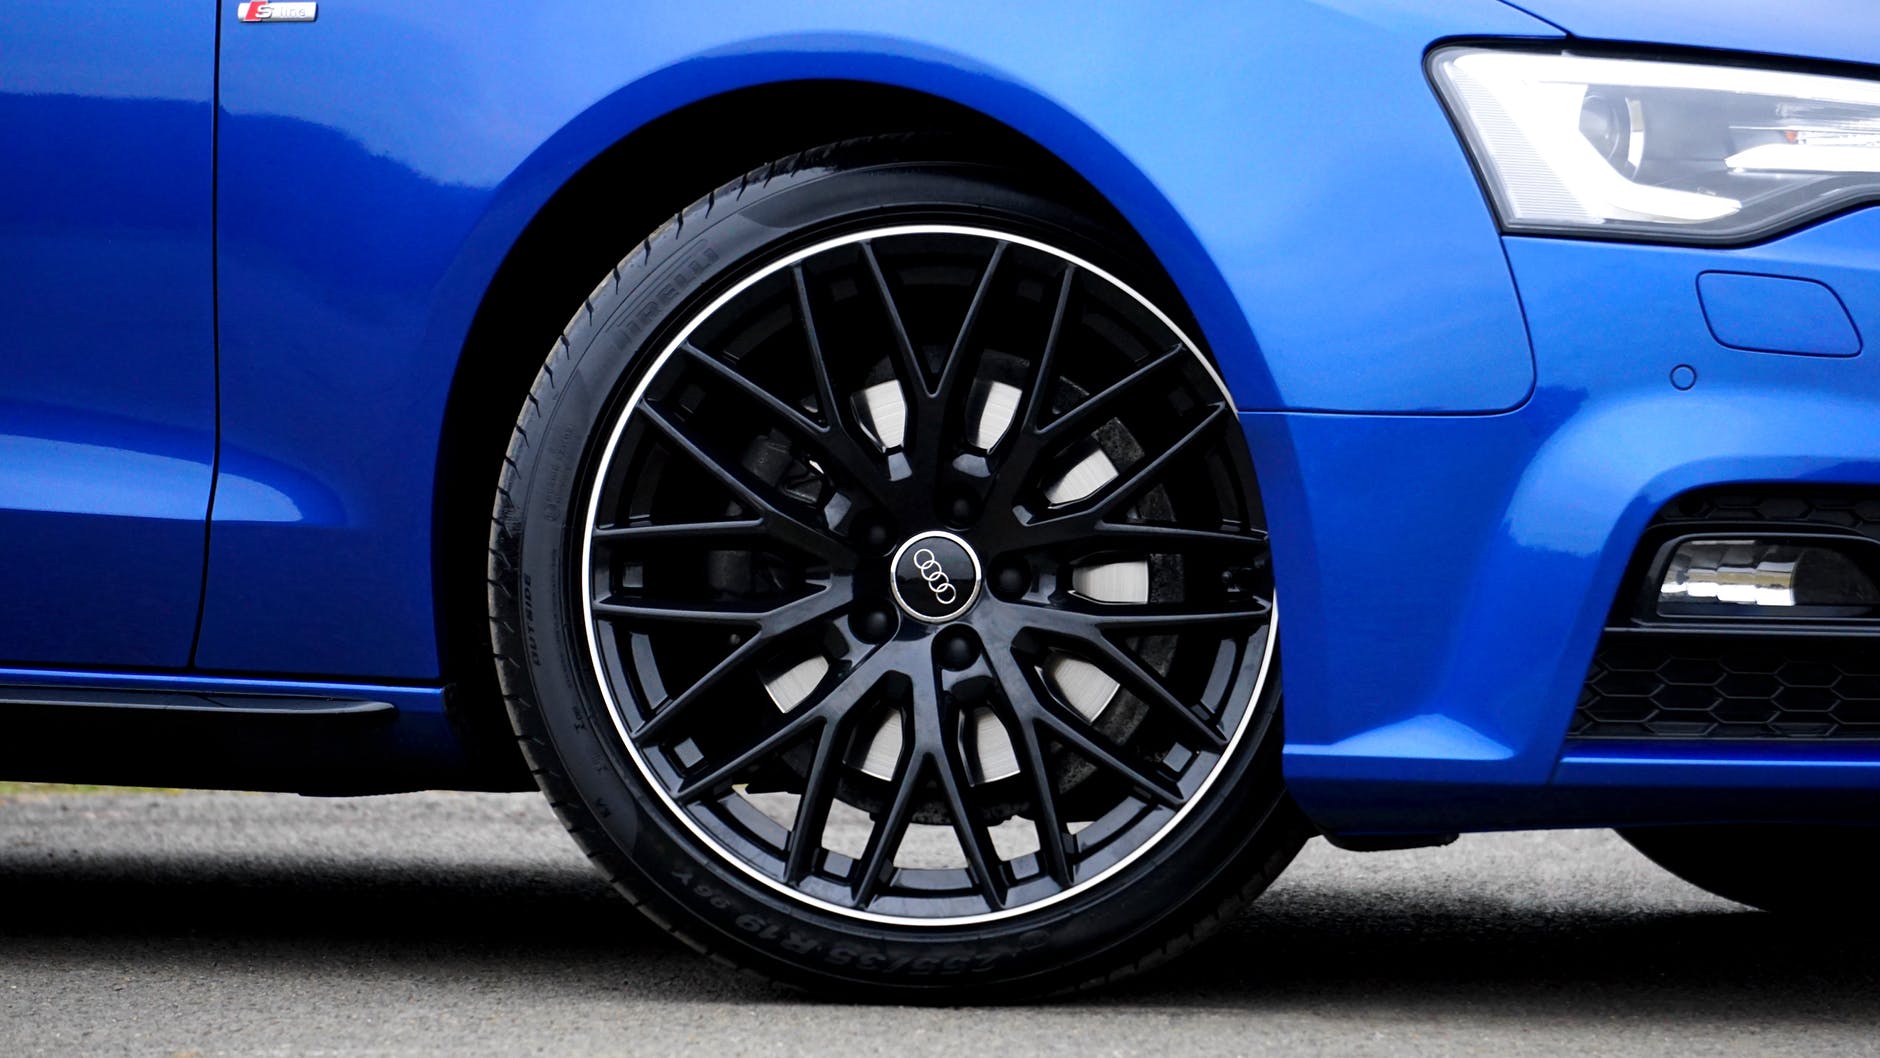 audi tires with blue paint